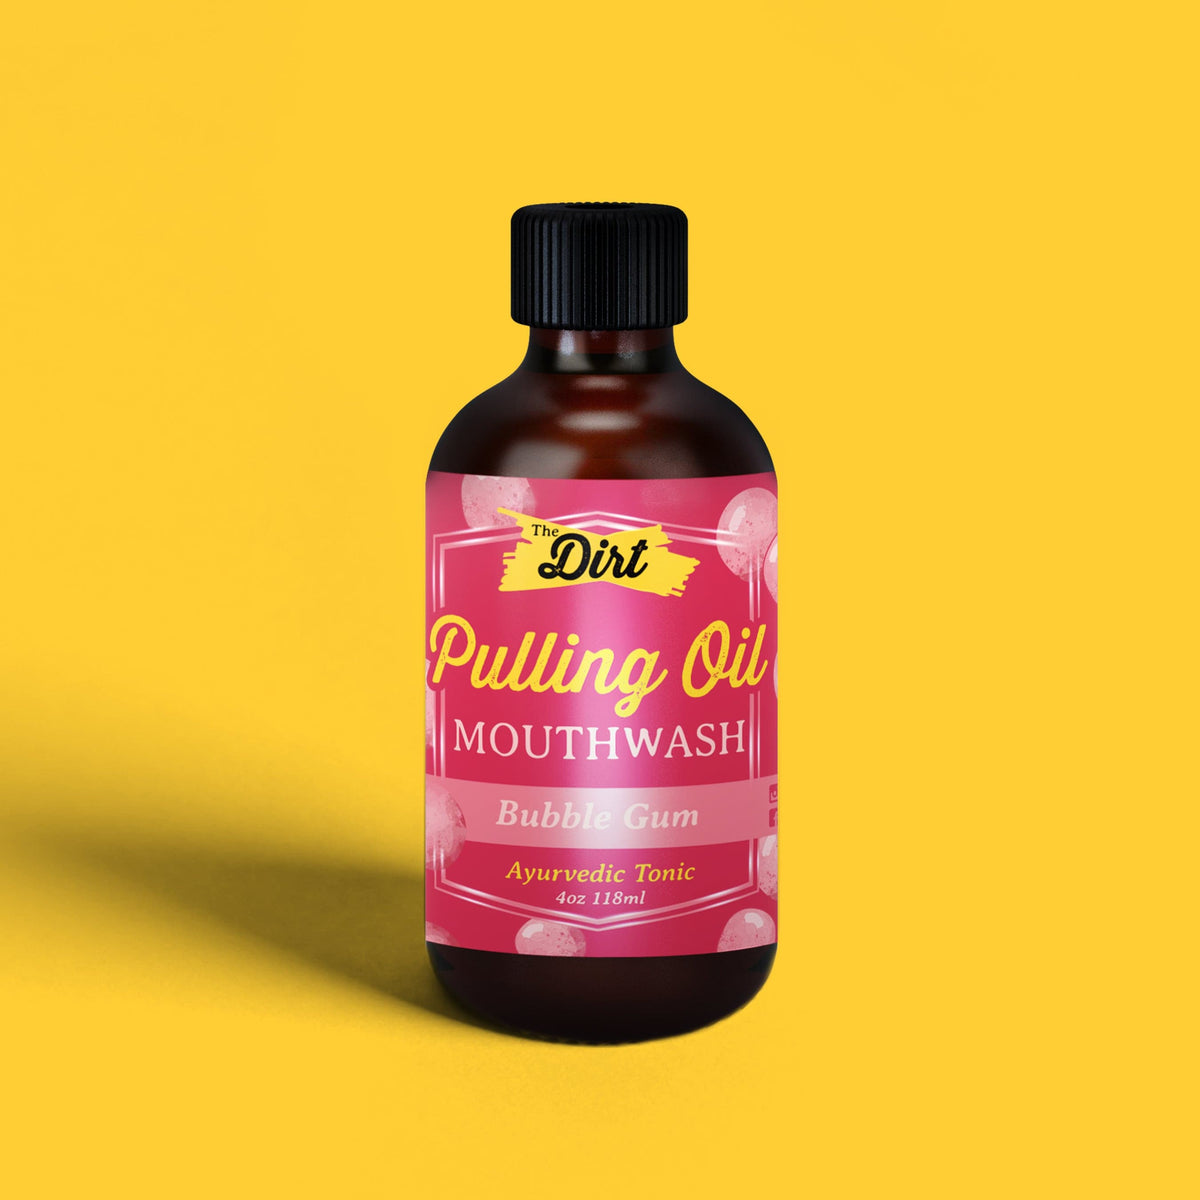 Pulling Oil Mouthwash - The Dirt - Super Natural Oral Care 4oz / Bubblegum Oral Care